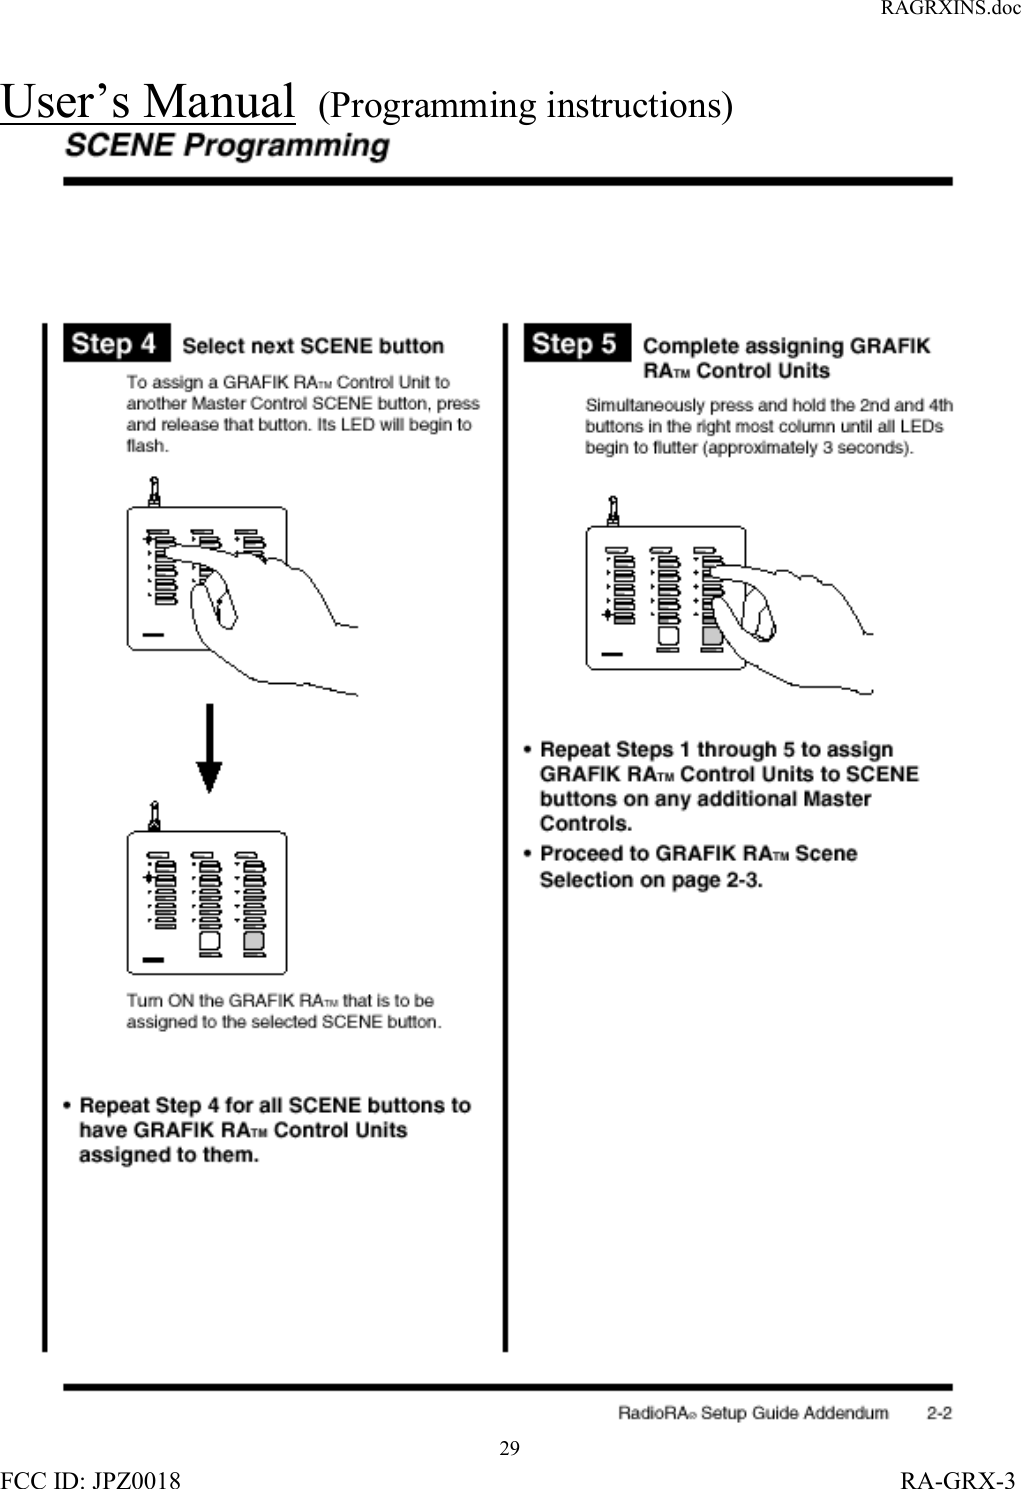 RAGRXINS.docFCC ID: JPZ0018                                                                                                                   RA-GRX-329User’s Manual  (Programming instructions)